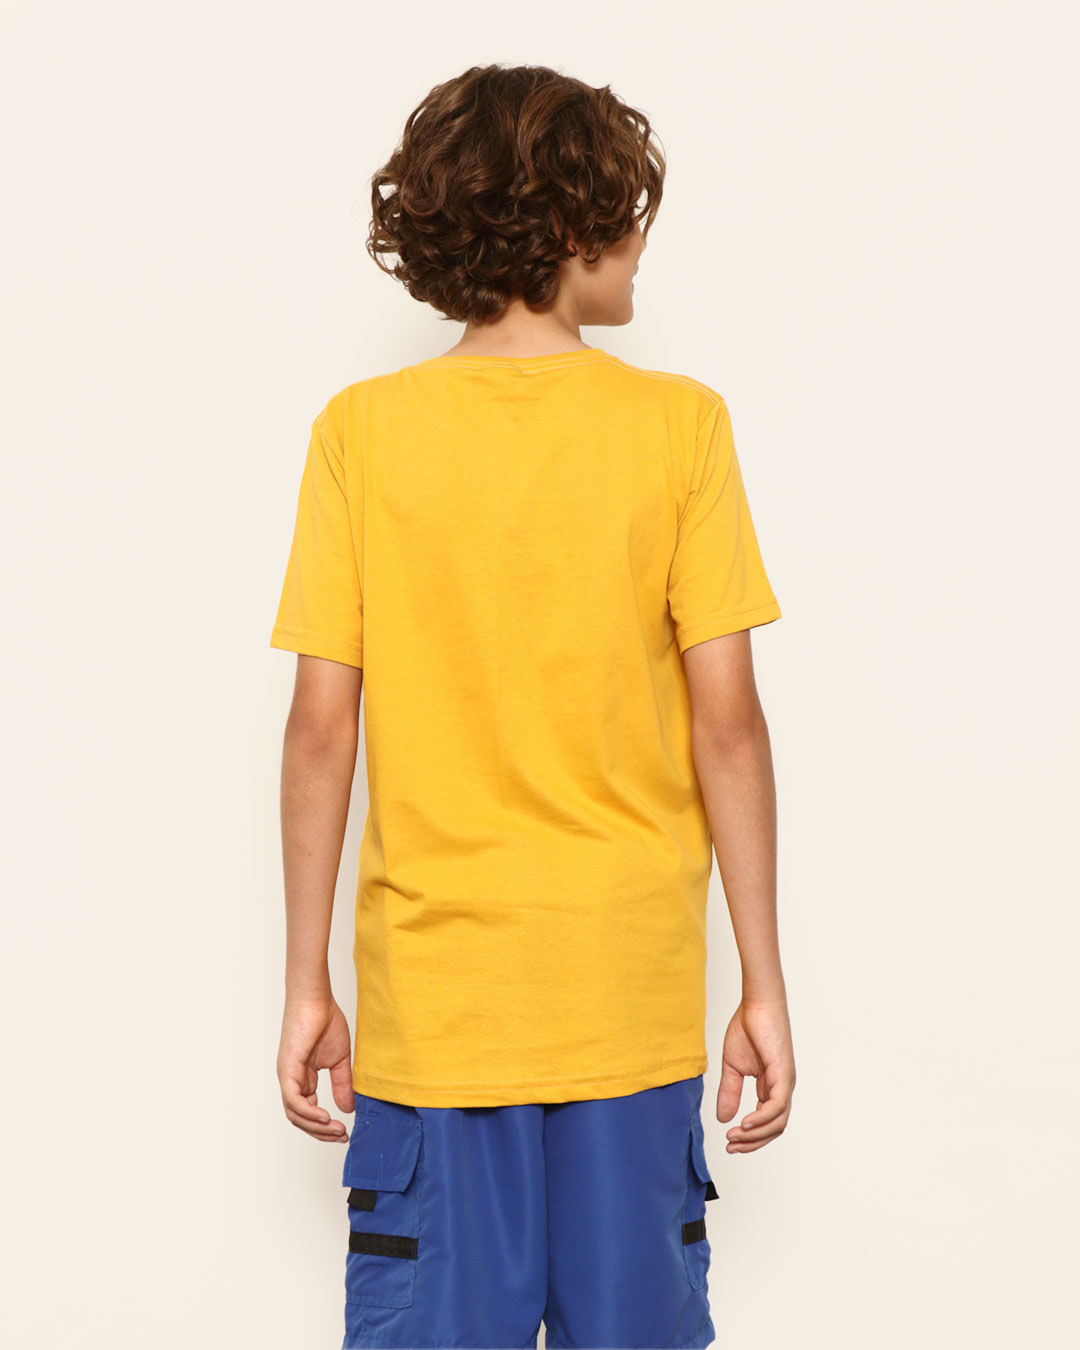 Camiseta-Juvenil-Menino-Naruto-com-Estampa-Frontal-Mostarda